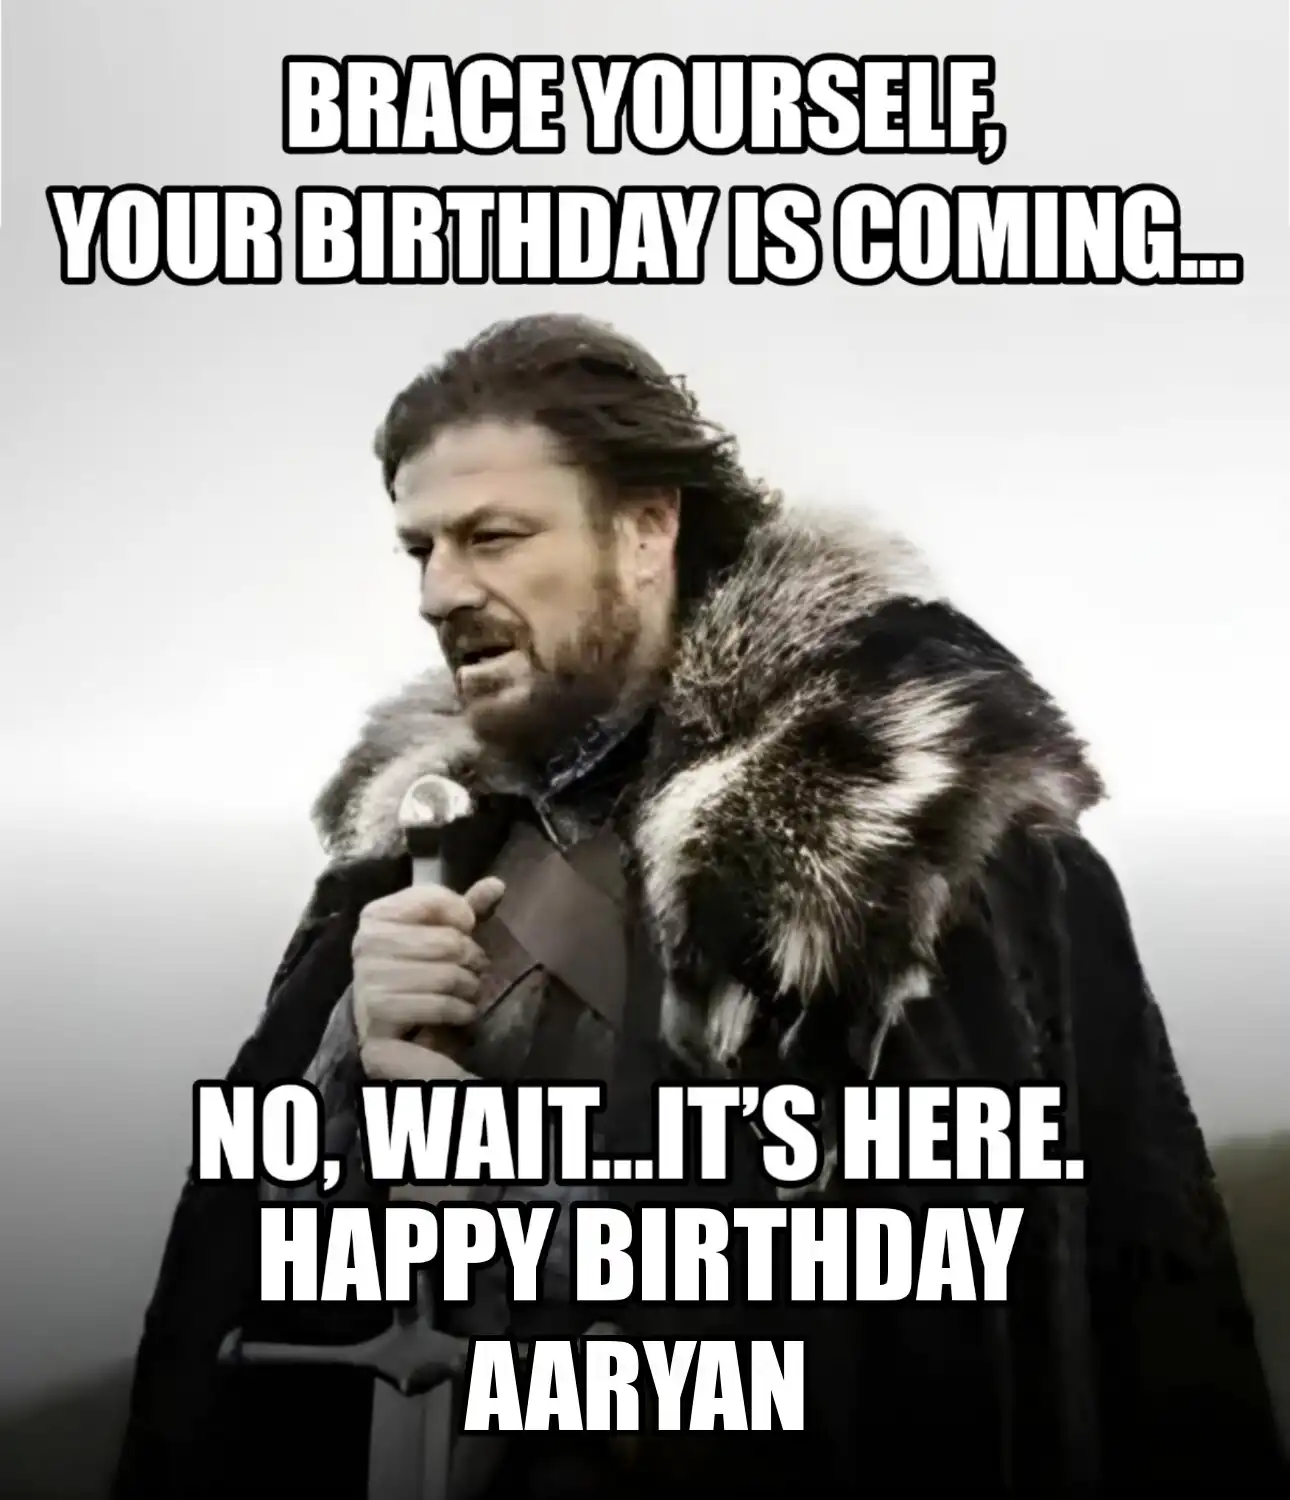 Happy Birthday Aaryan Brace Yourself Your Birthday Is Coming Meme